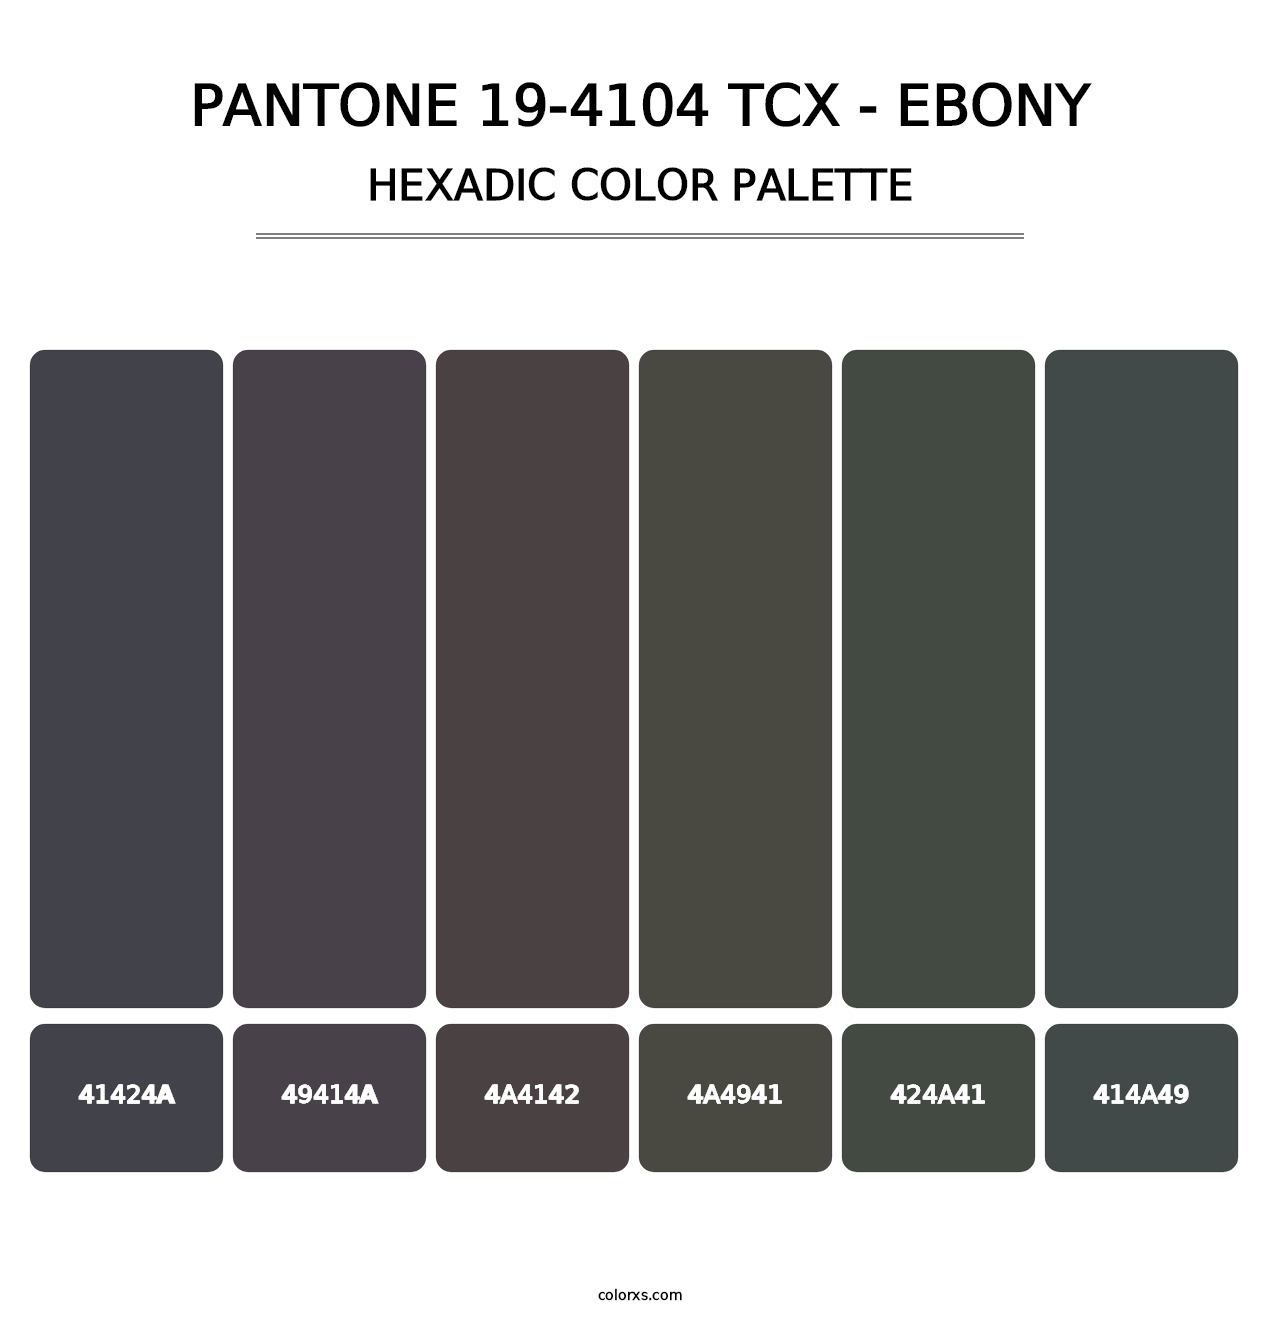 PANTONE 19-4104 TCX - Ebony - Hexadic Color Palette